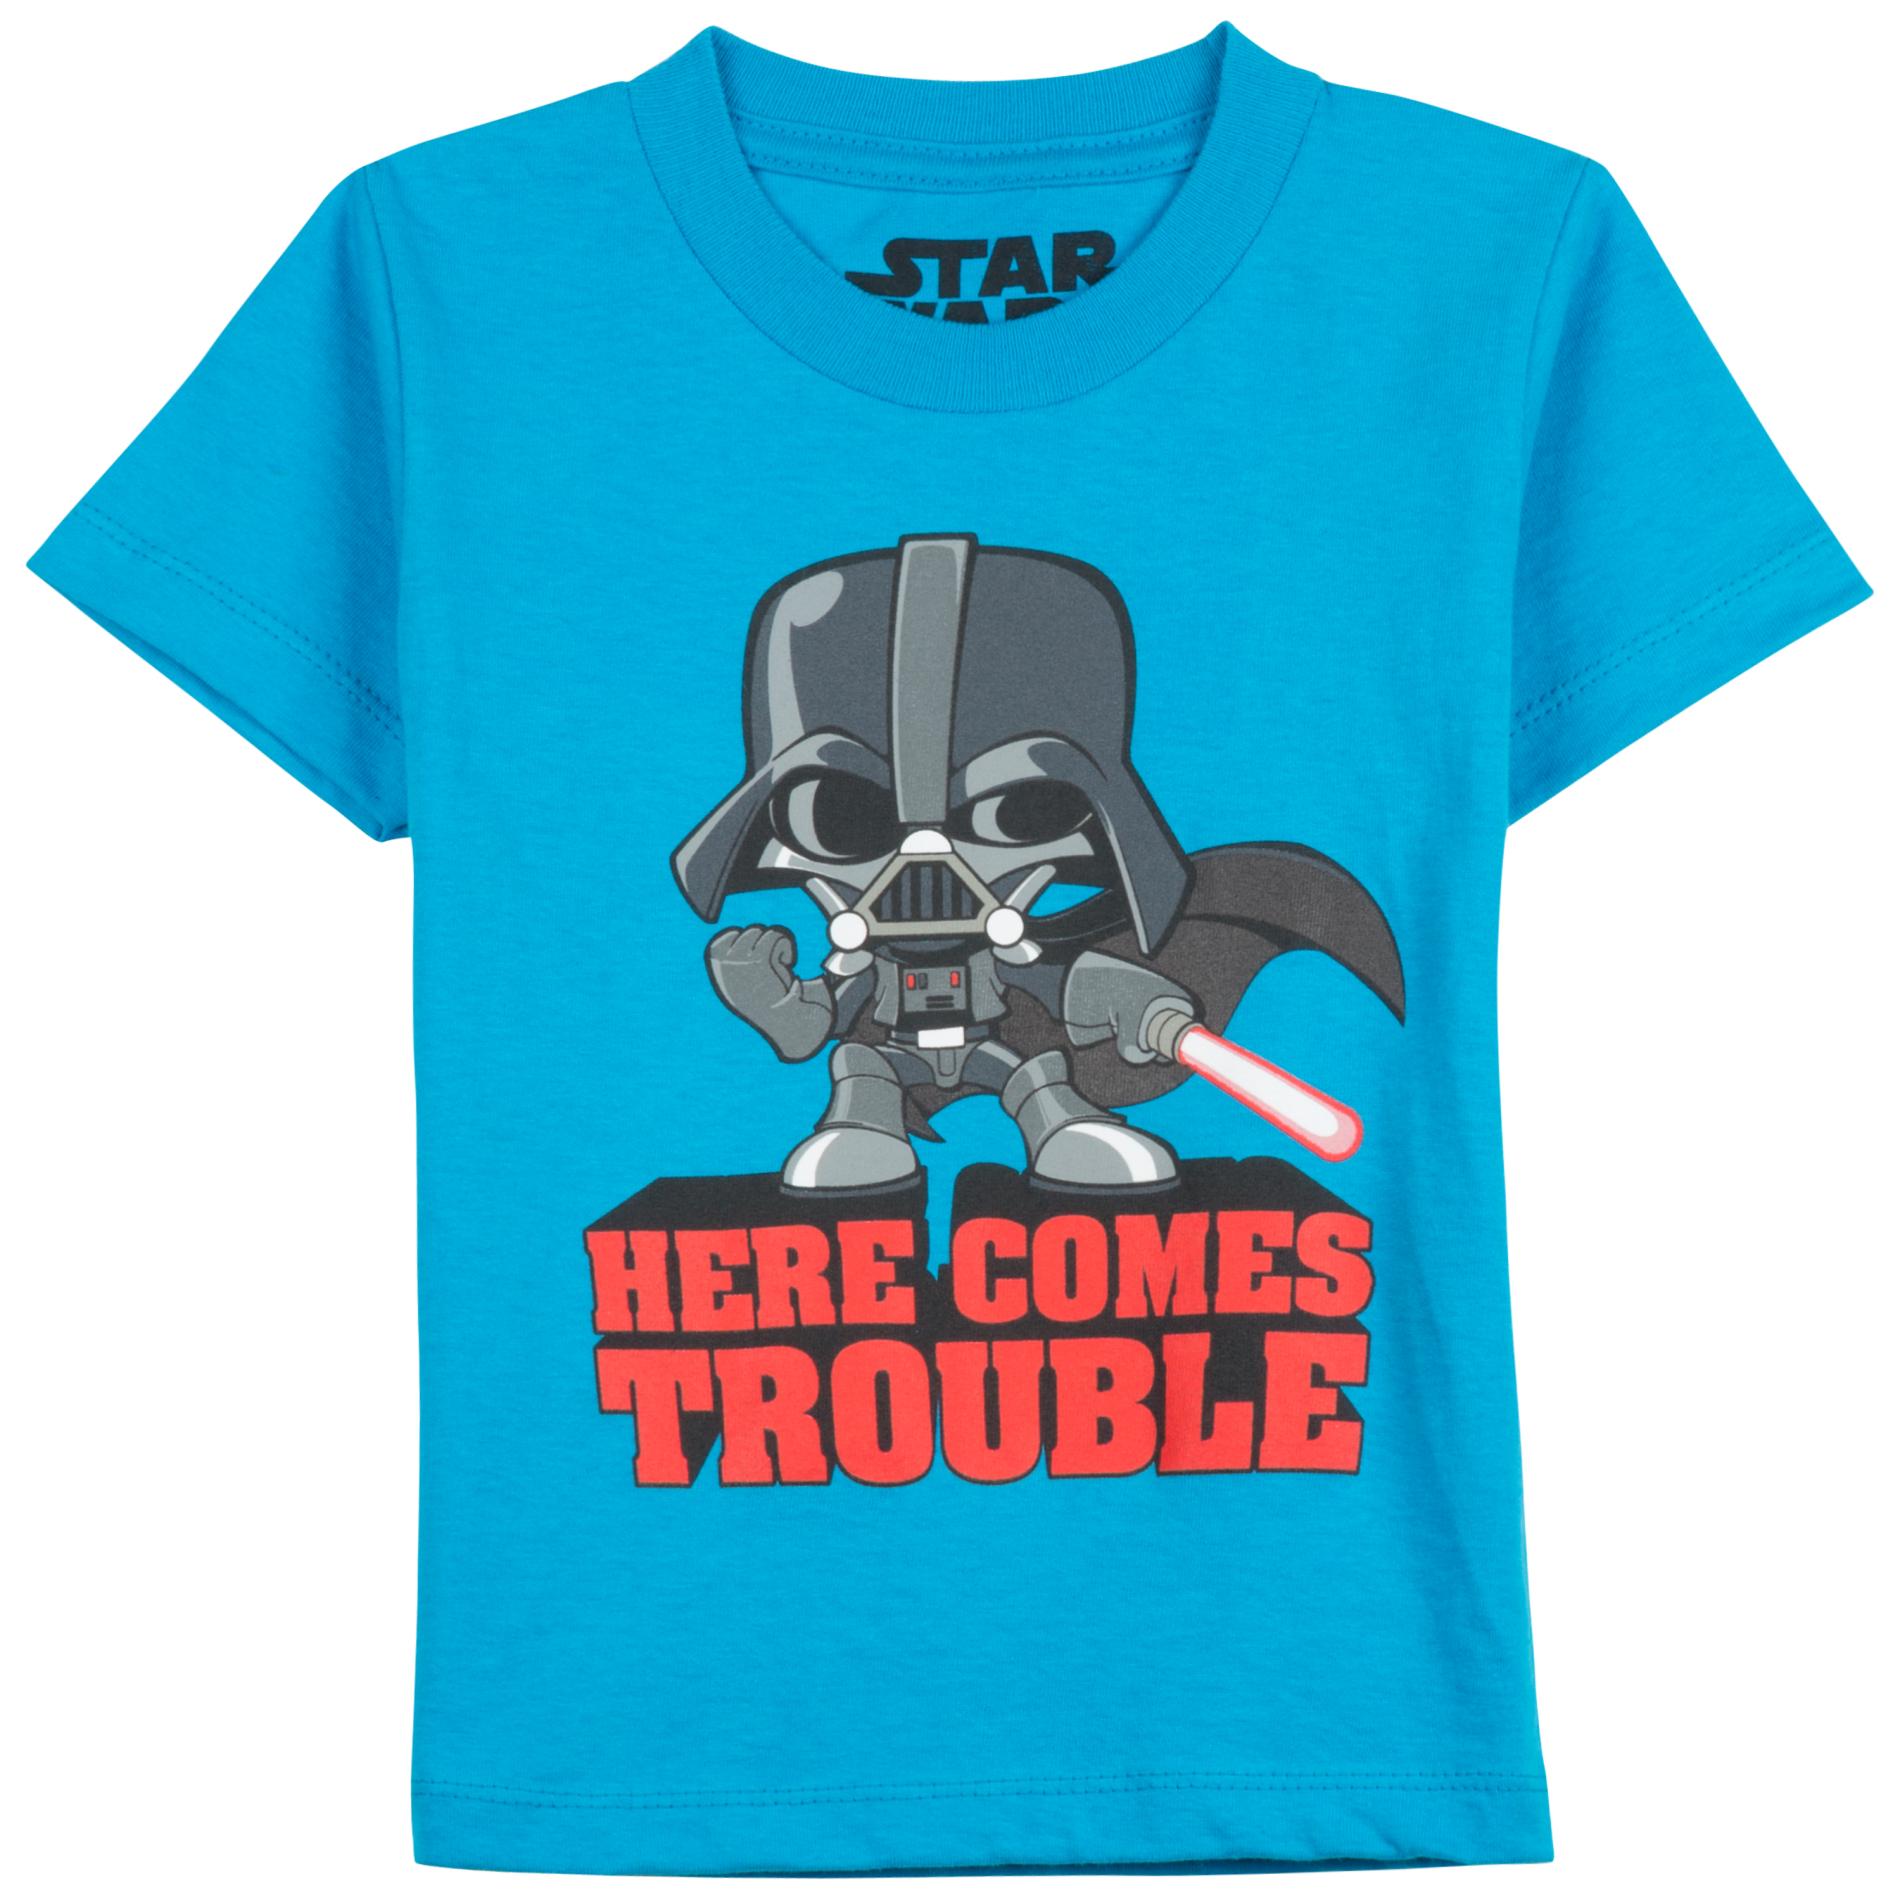 Star Wars Toddler Boy's Graphic T-Shirt